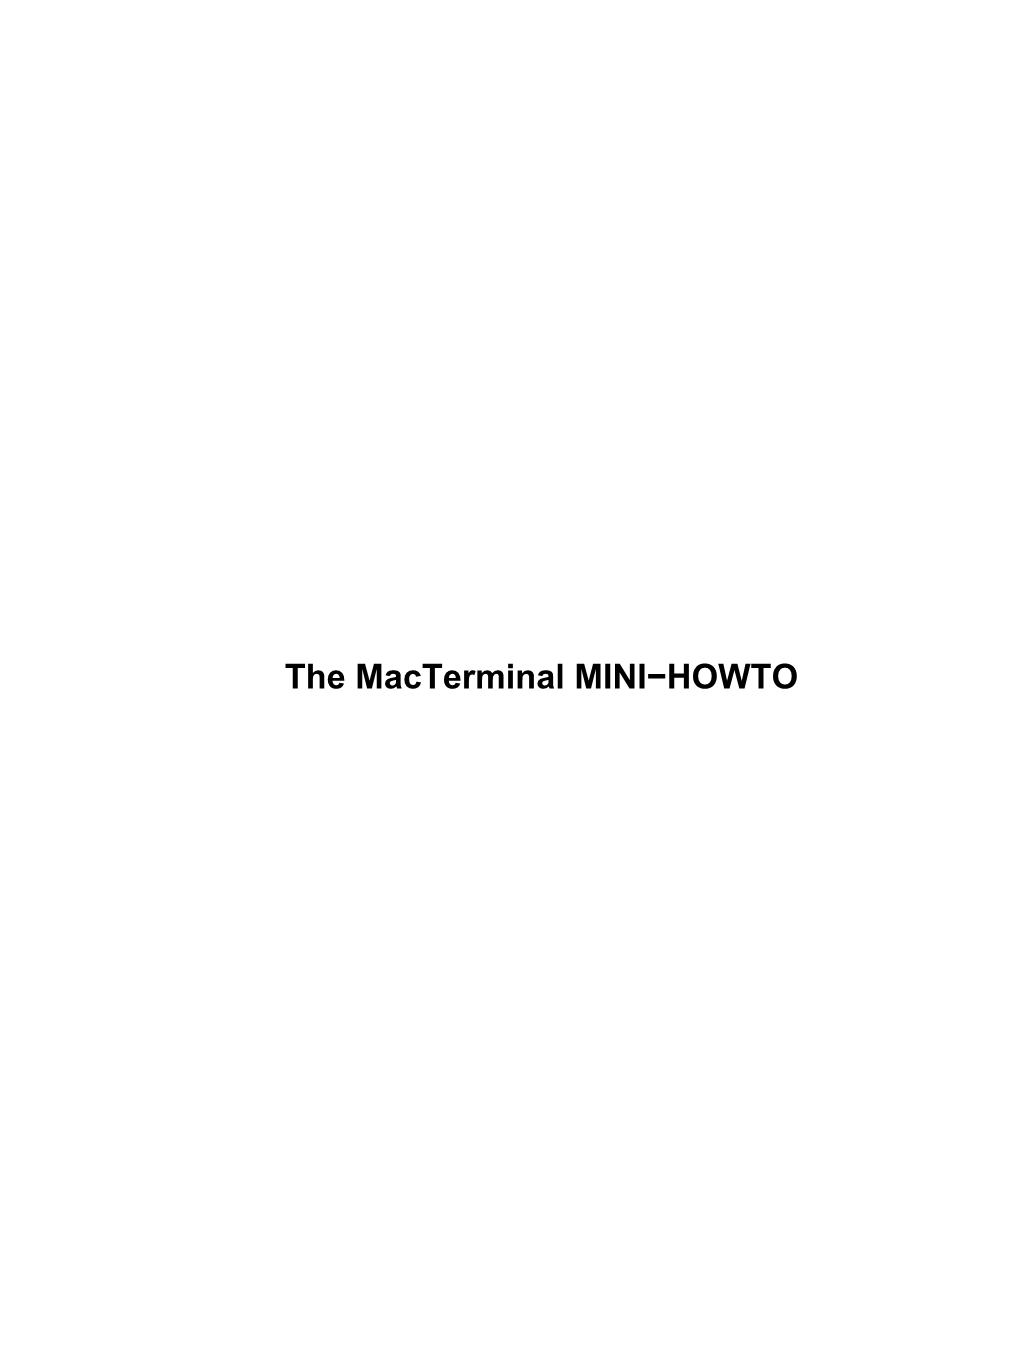 The Macterminal MINI-HOWTO